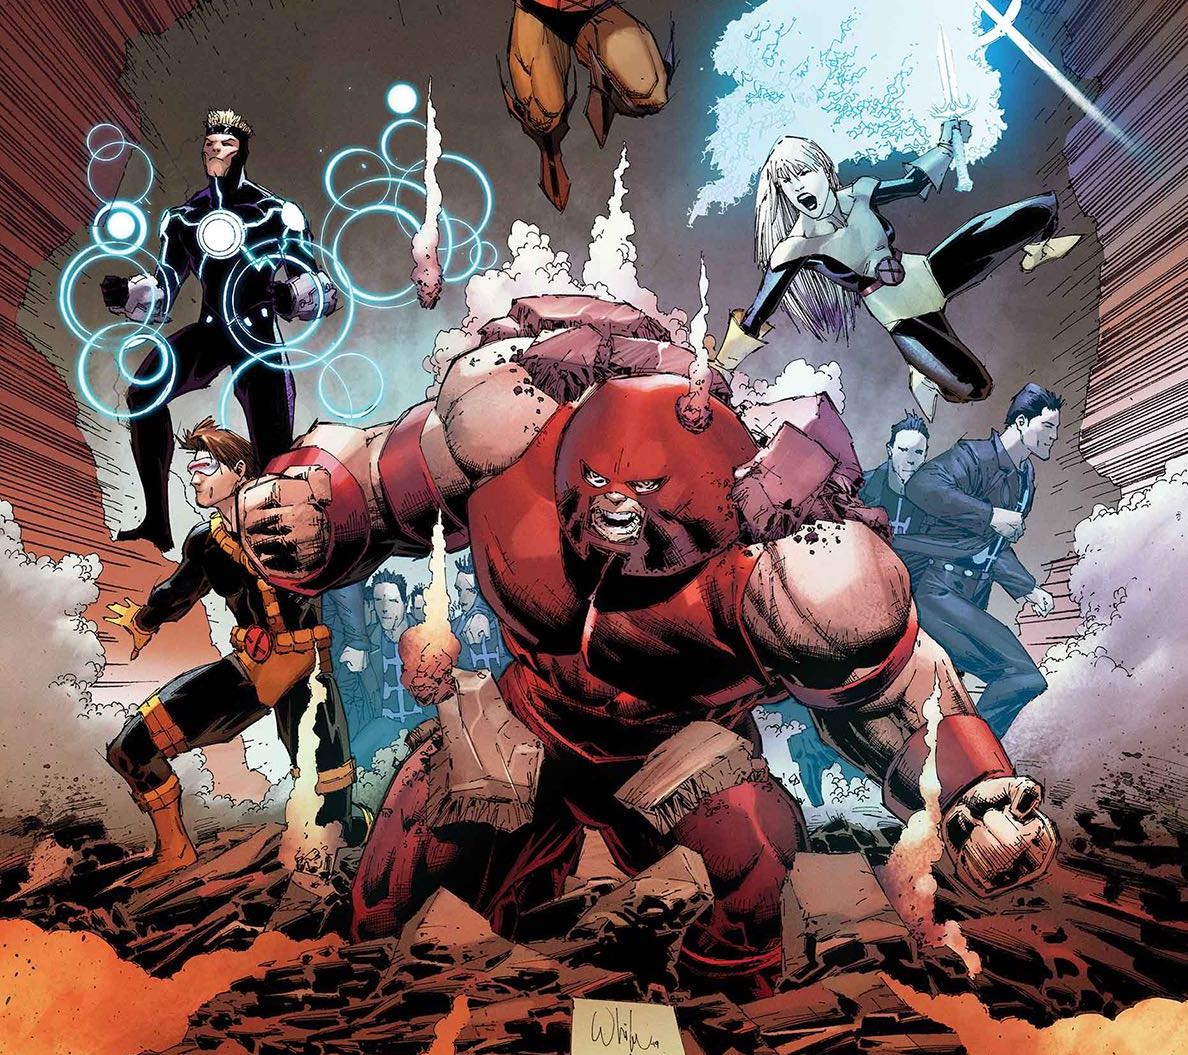 Uncanny X-Men #21 review: All is forgotten